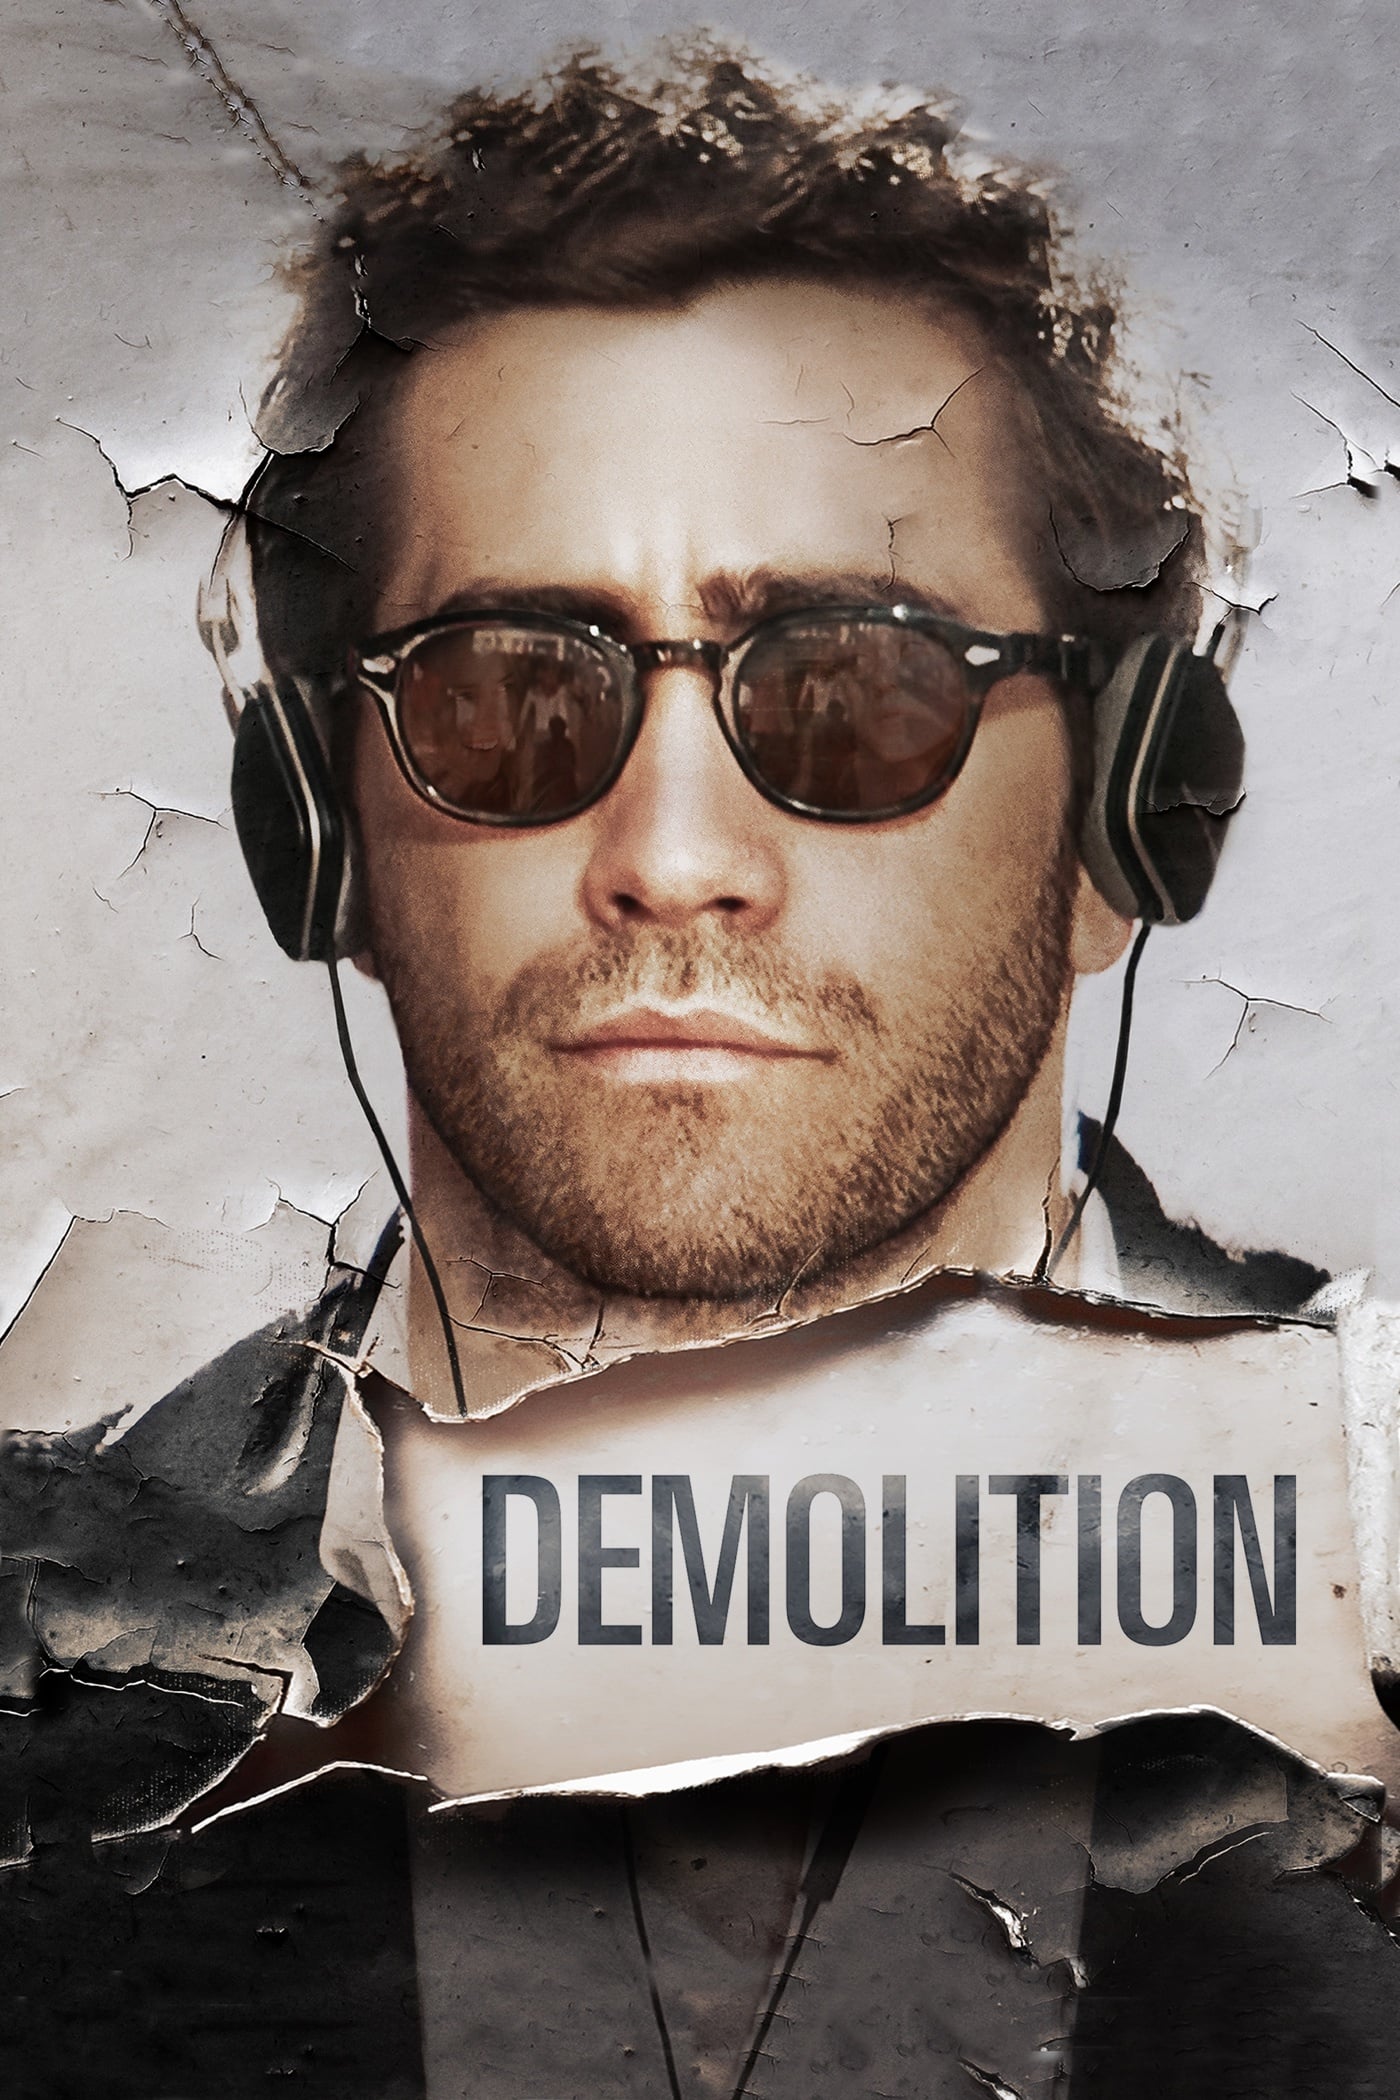 Demolition download the last version for windows